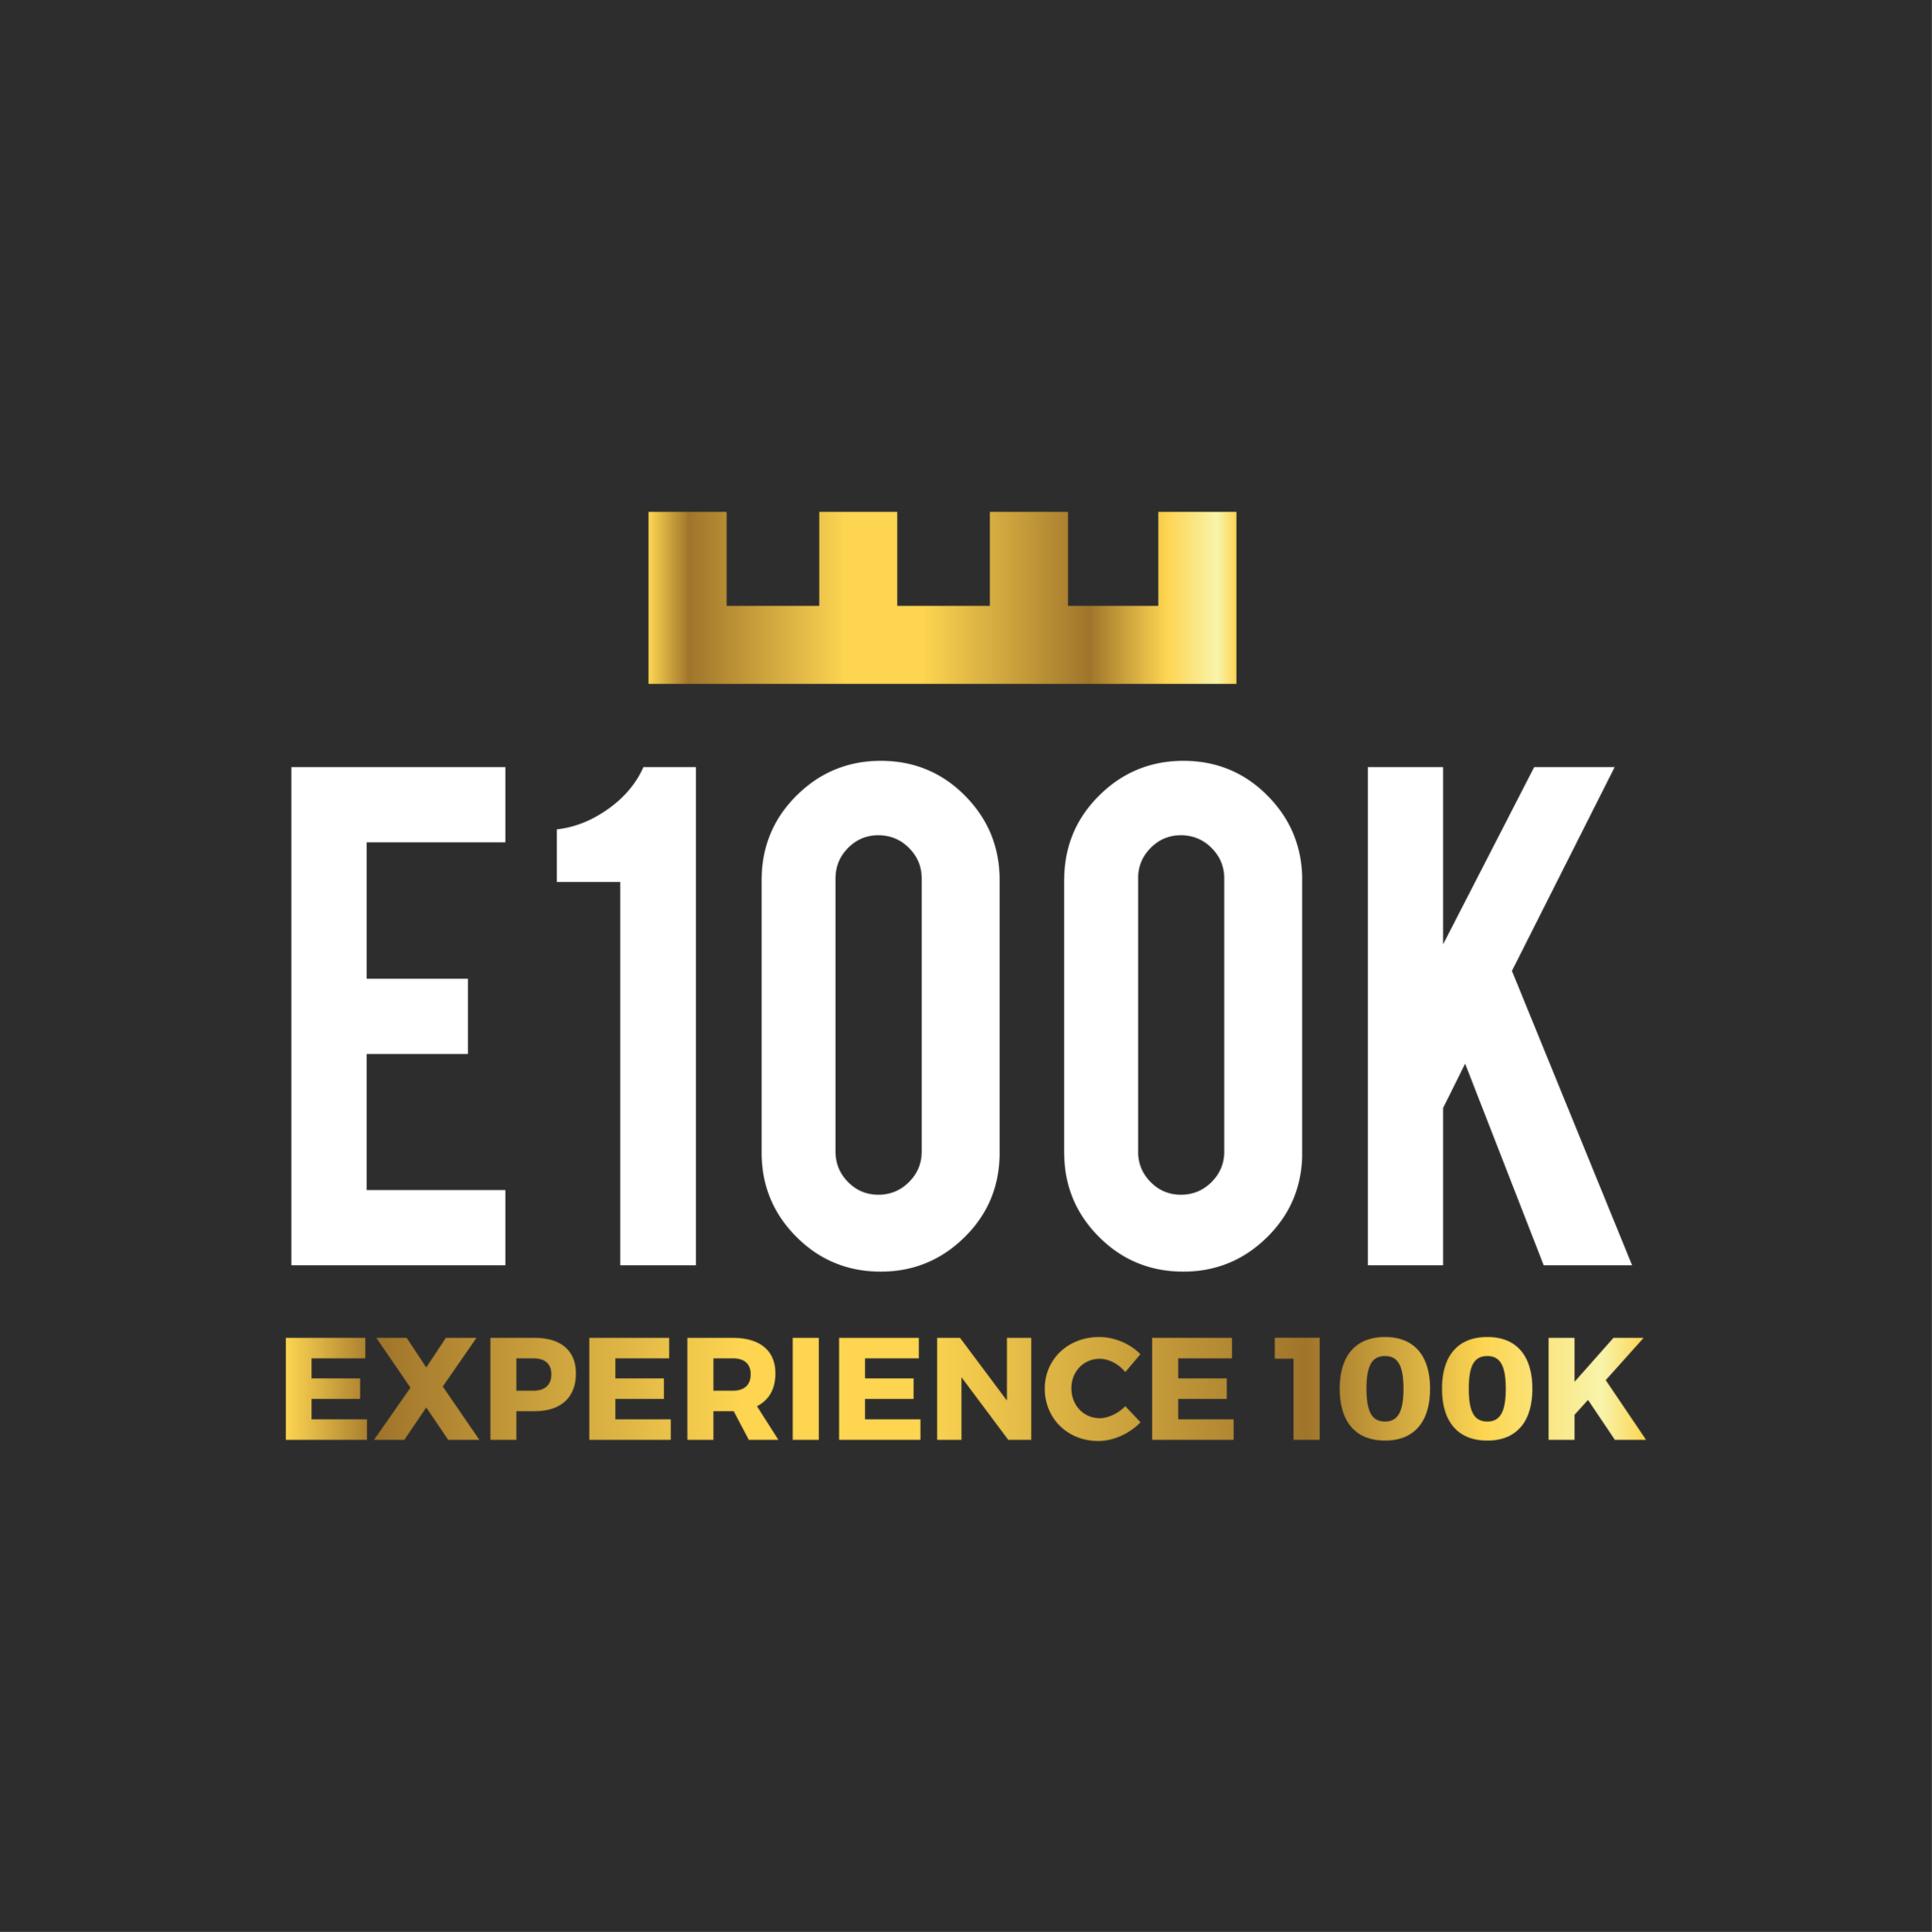 Experience 100K